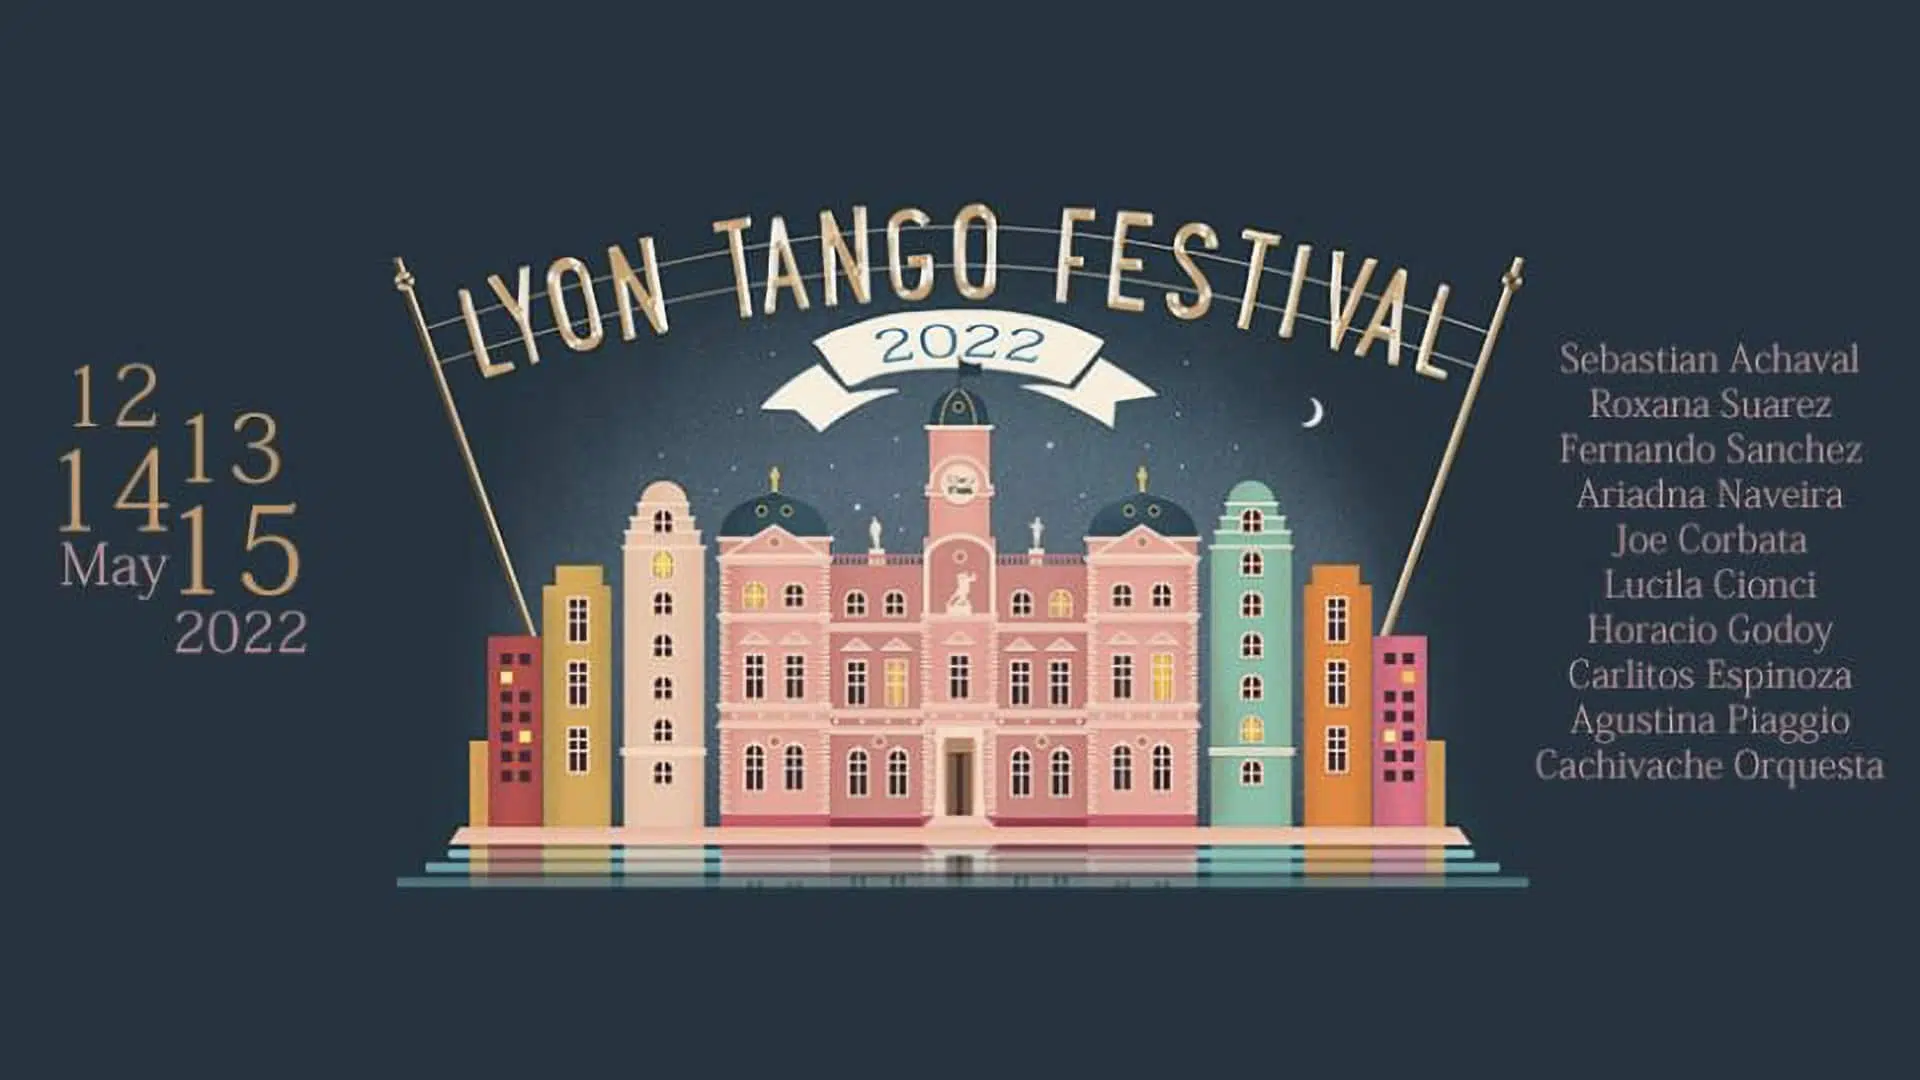 Lyon Tango Festival 2022 preview picture